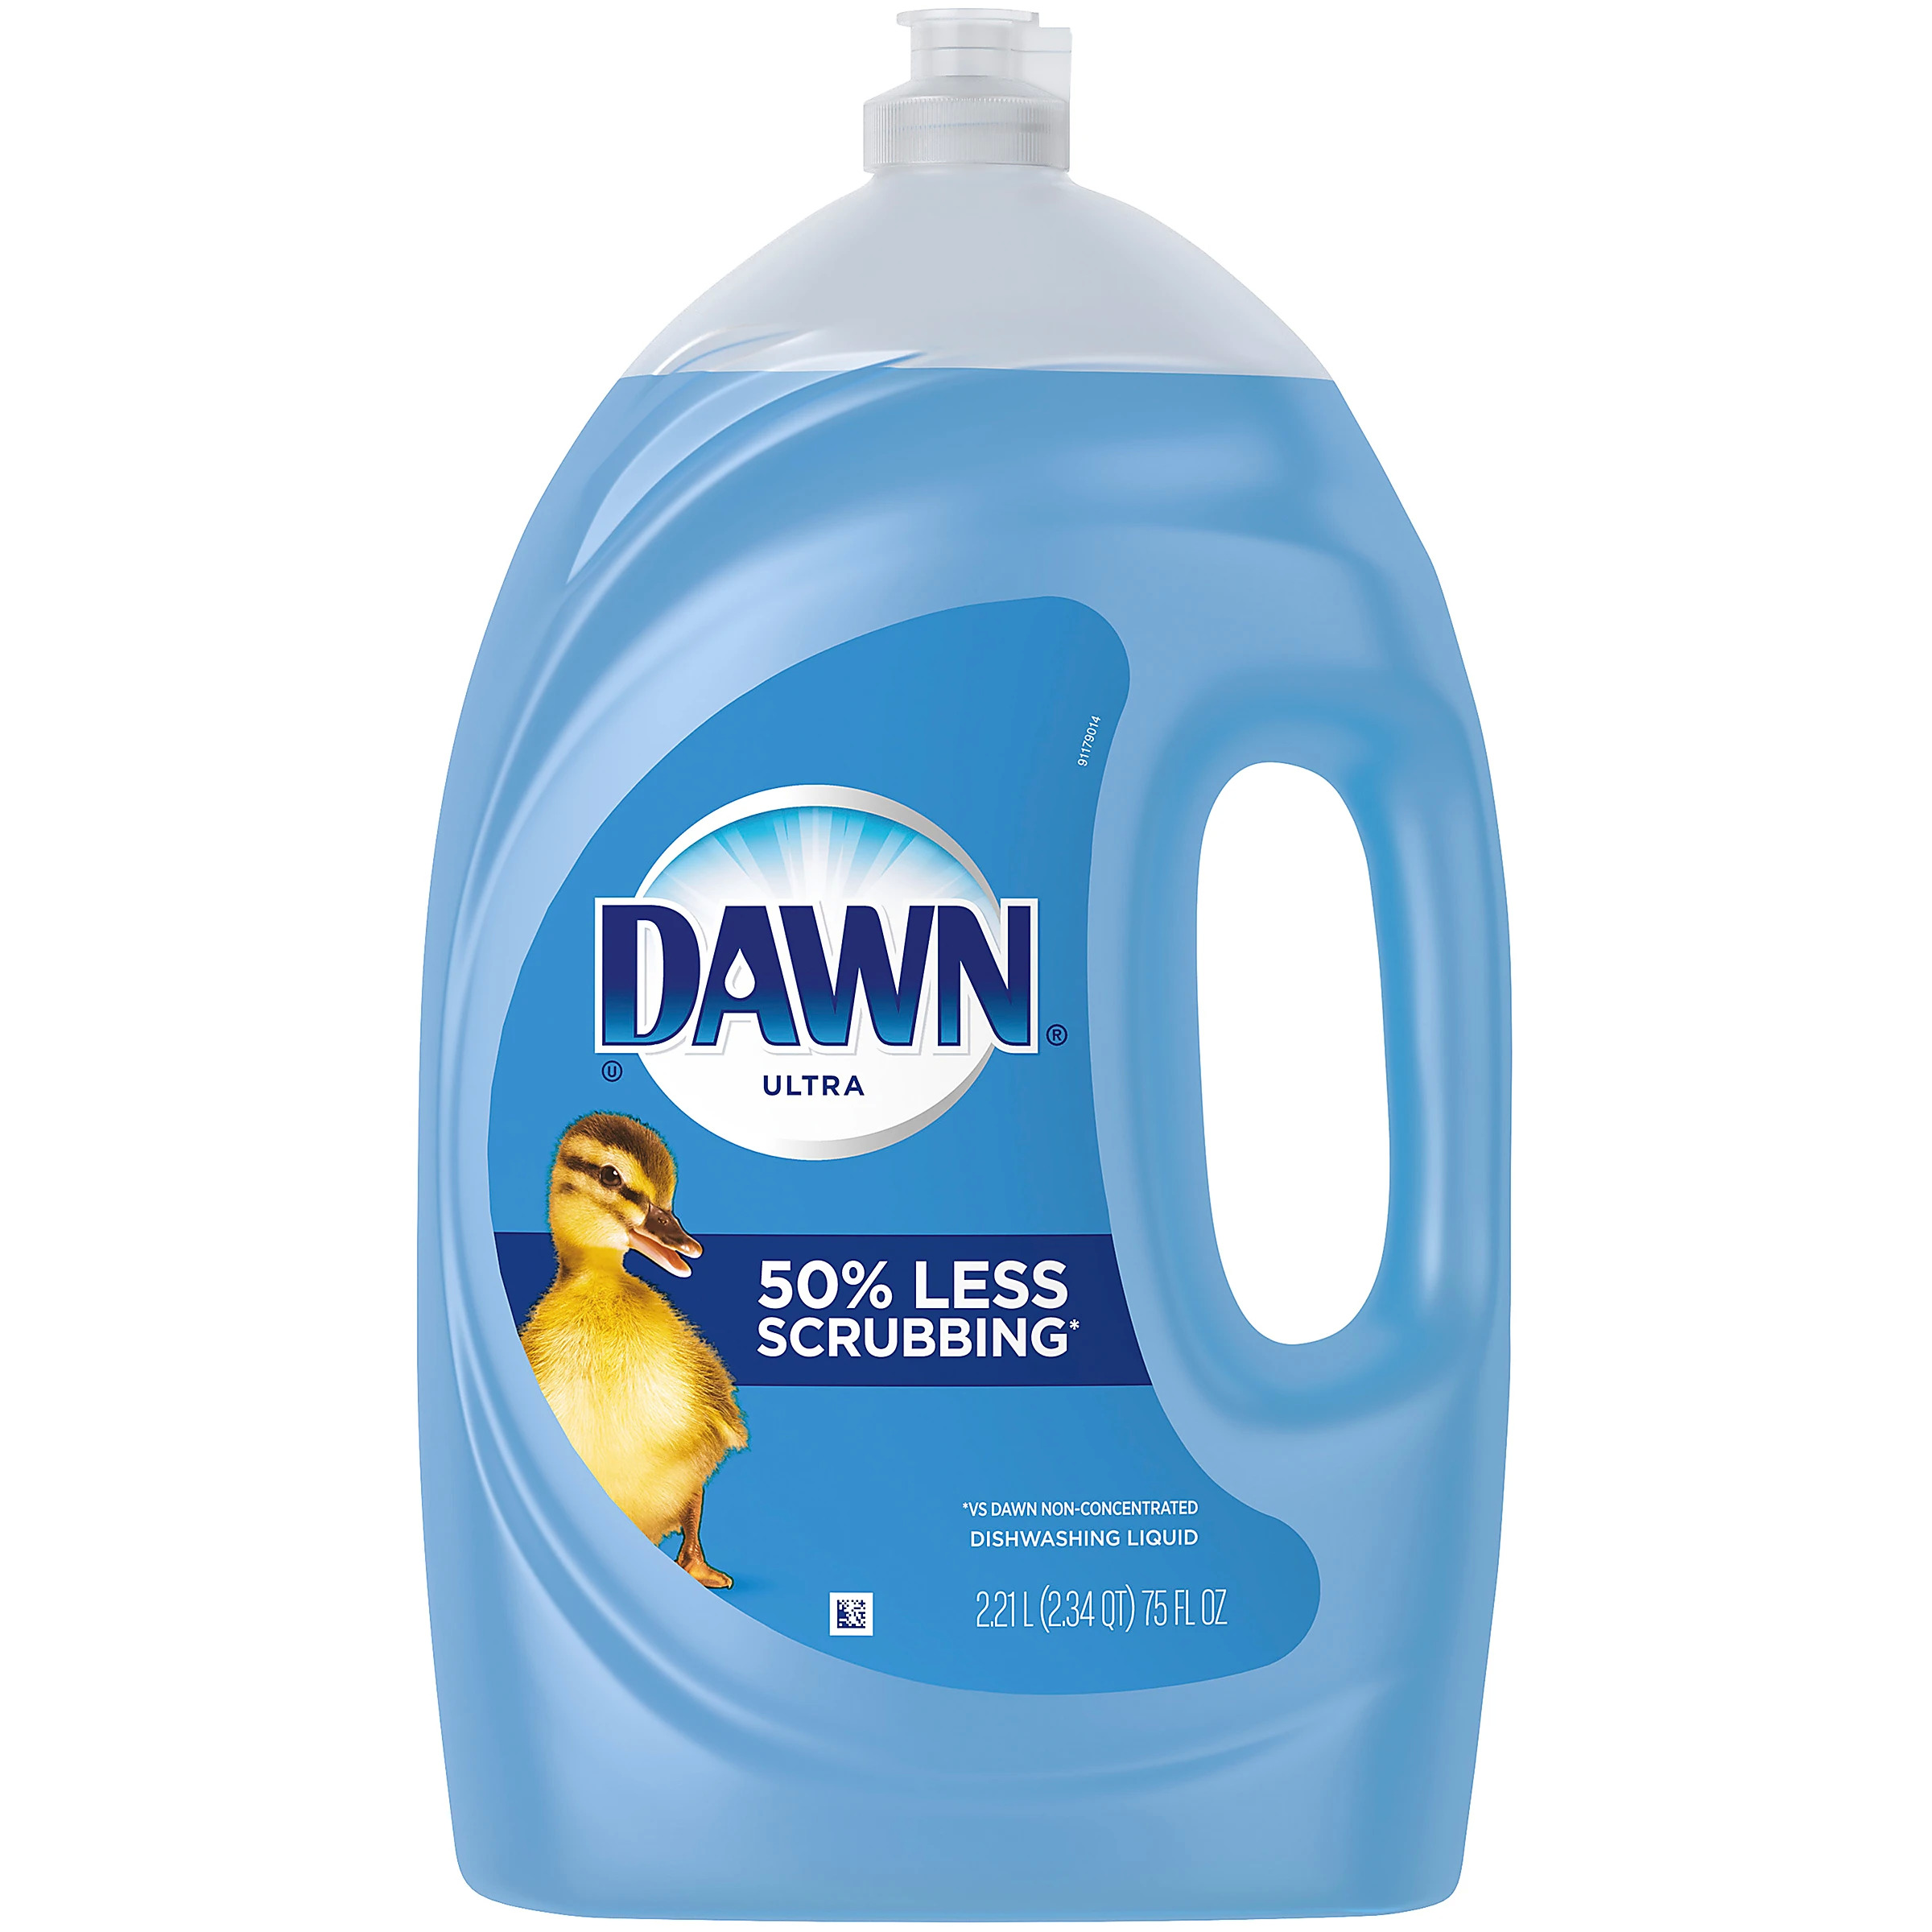 75-Oz Dawn Dishwashing Liquid (Original Scent) $9 + Free Store Pickup at Office Depot and Office Max